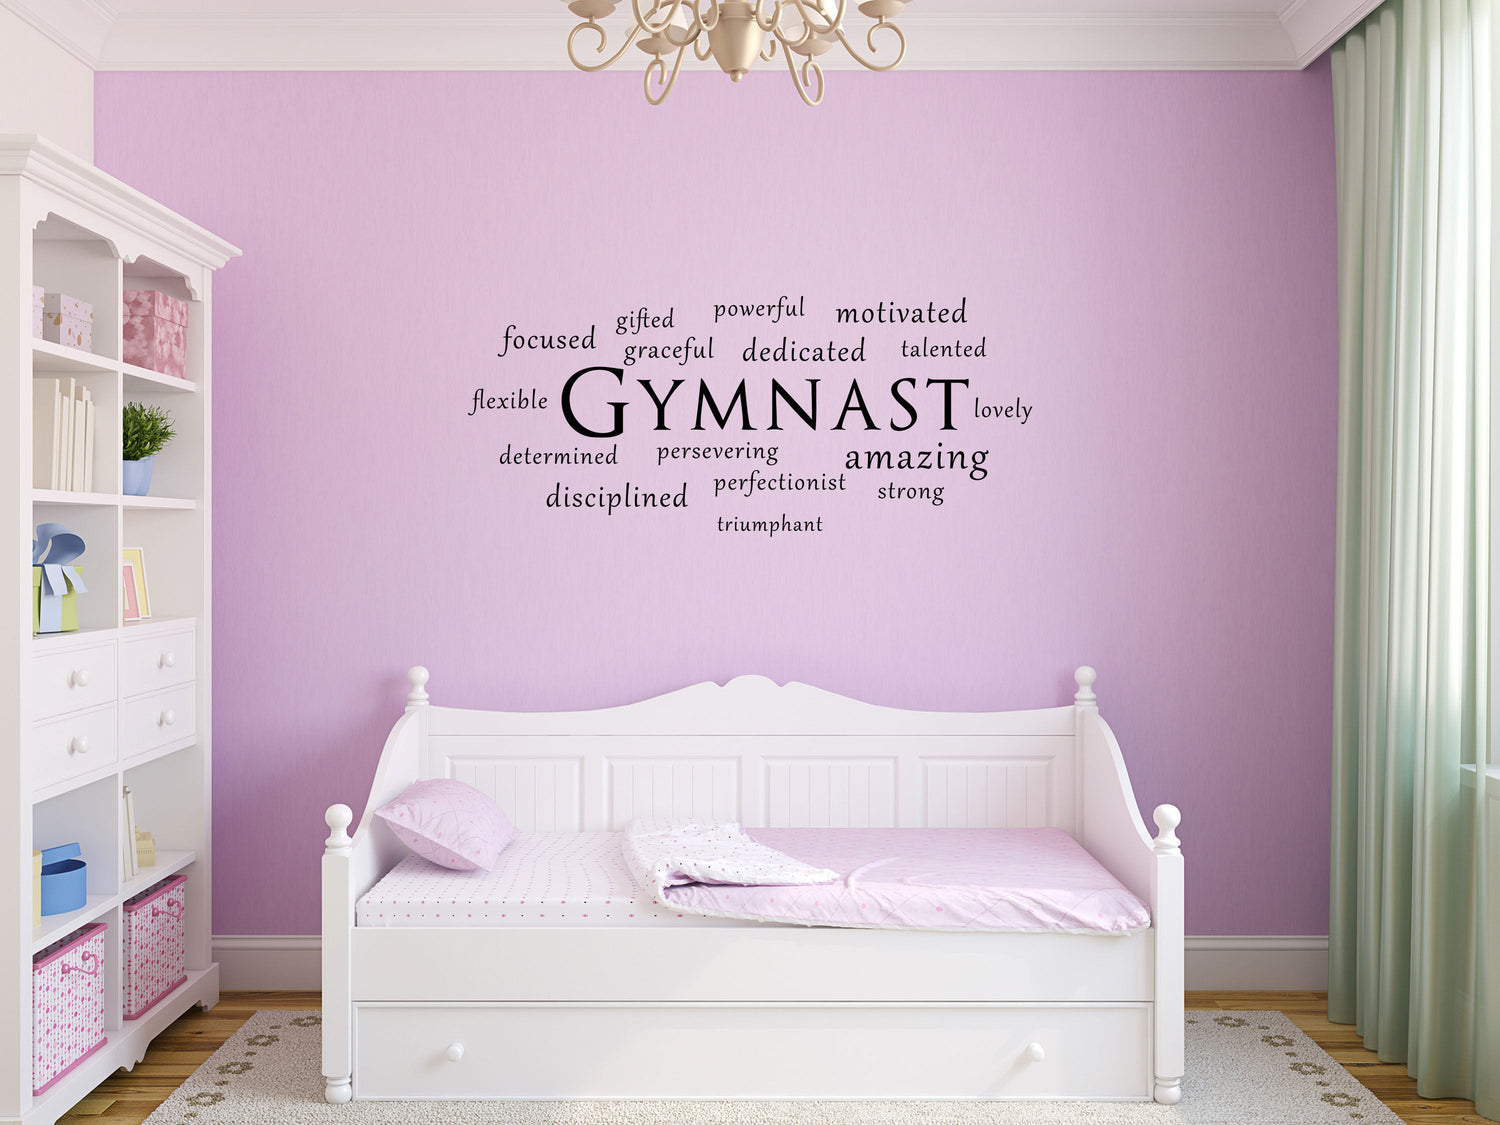 Gymnast Wall Sticker - Gymnastics Wall Decal Wall Art - Gymnastics Quote, Bedroom Decals Vinyl Wall Decal Inspirational Wall Signs 